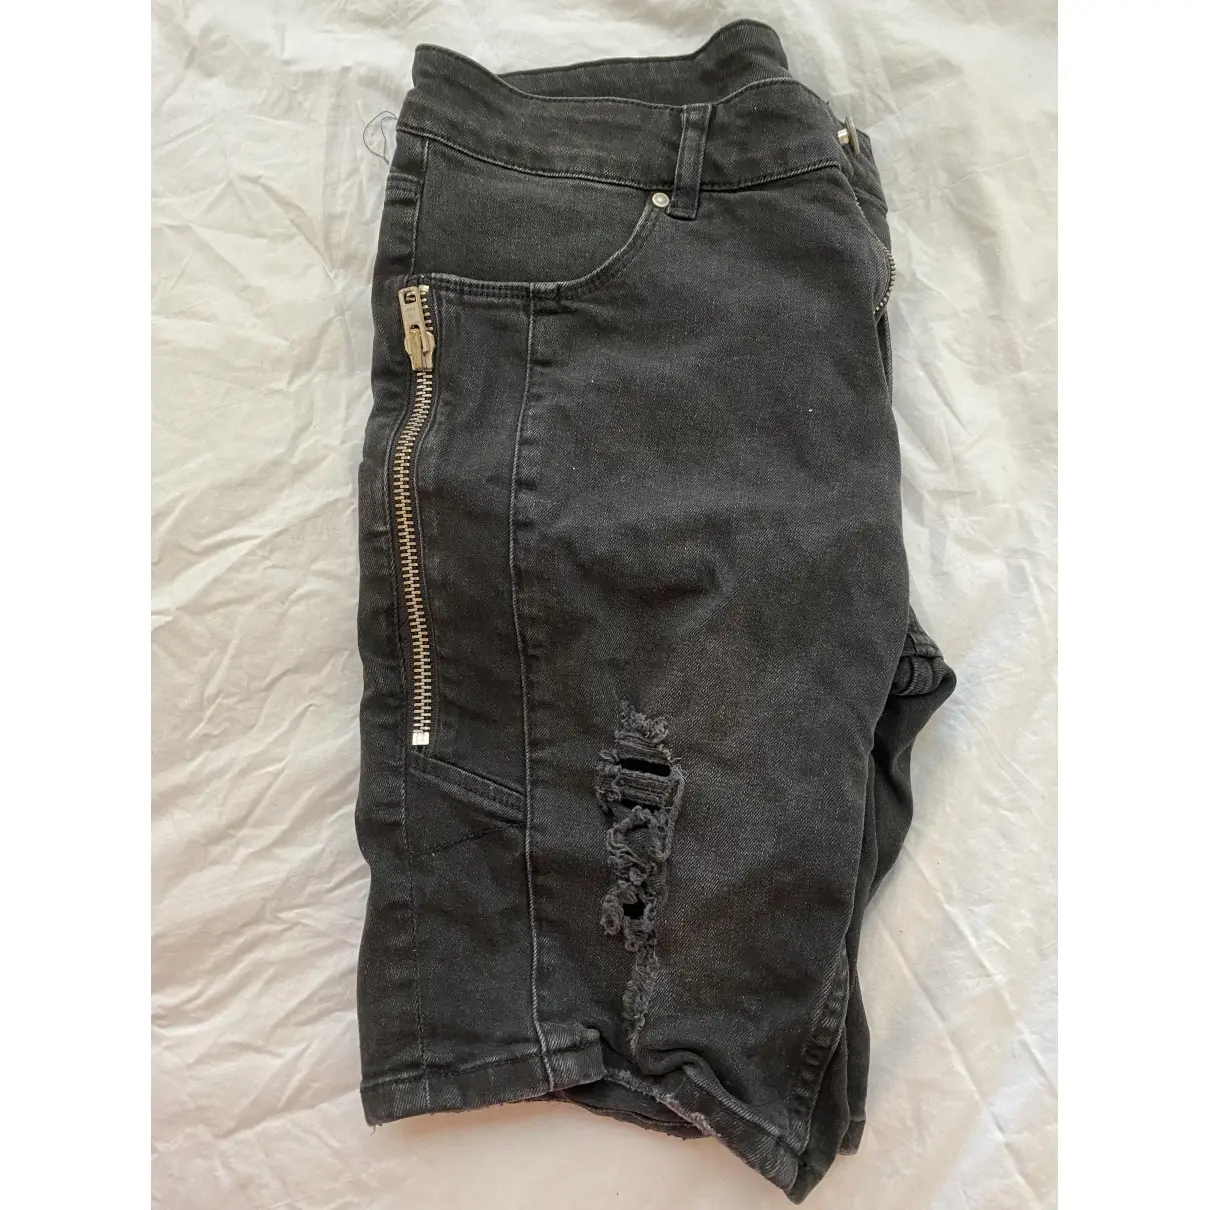 Buy Asos Black Denim - Jeans Shorts online